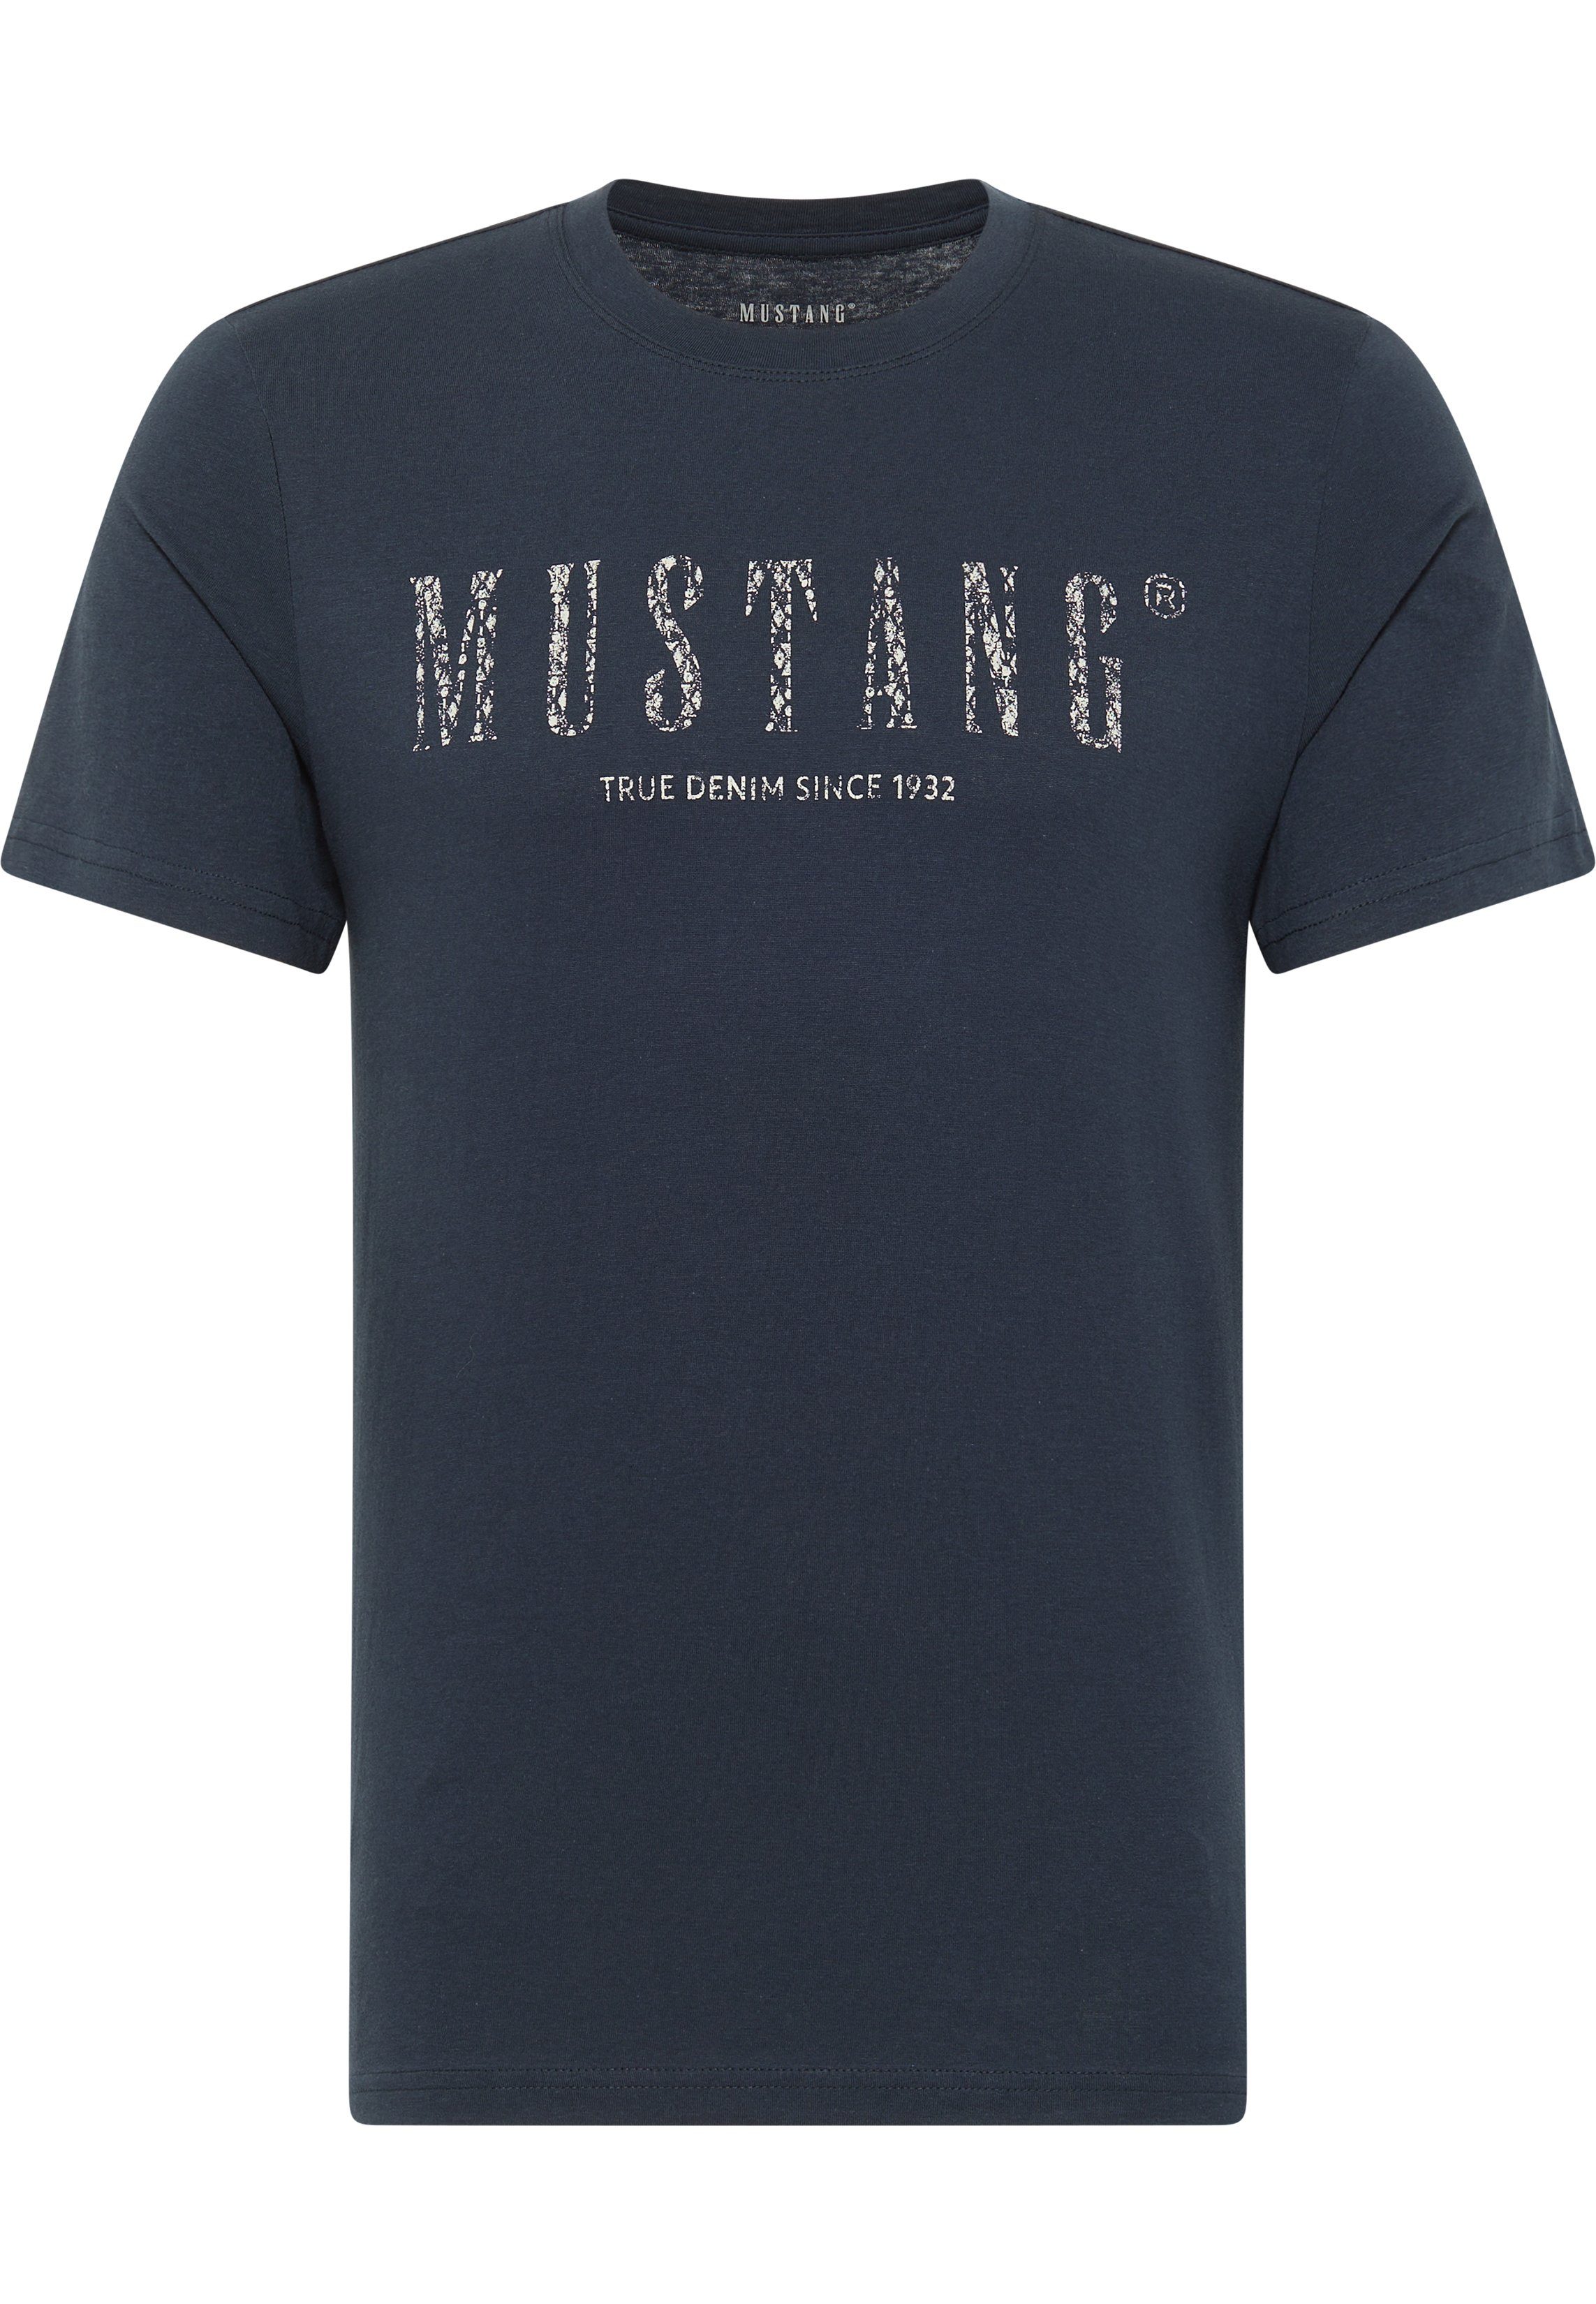 MUSTANG Kurzarmshirt Mustang Print-Shirt blau